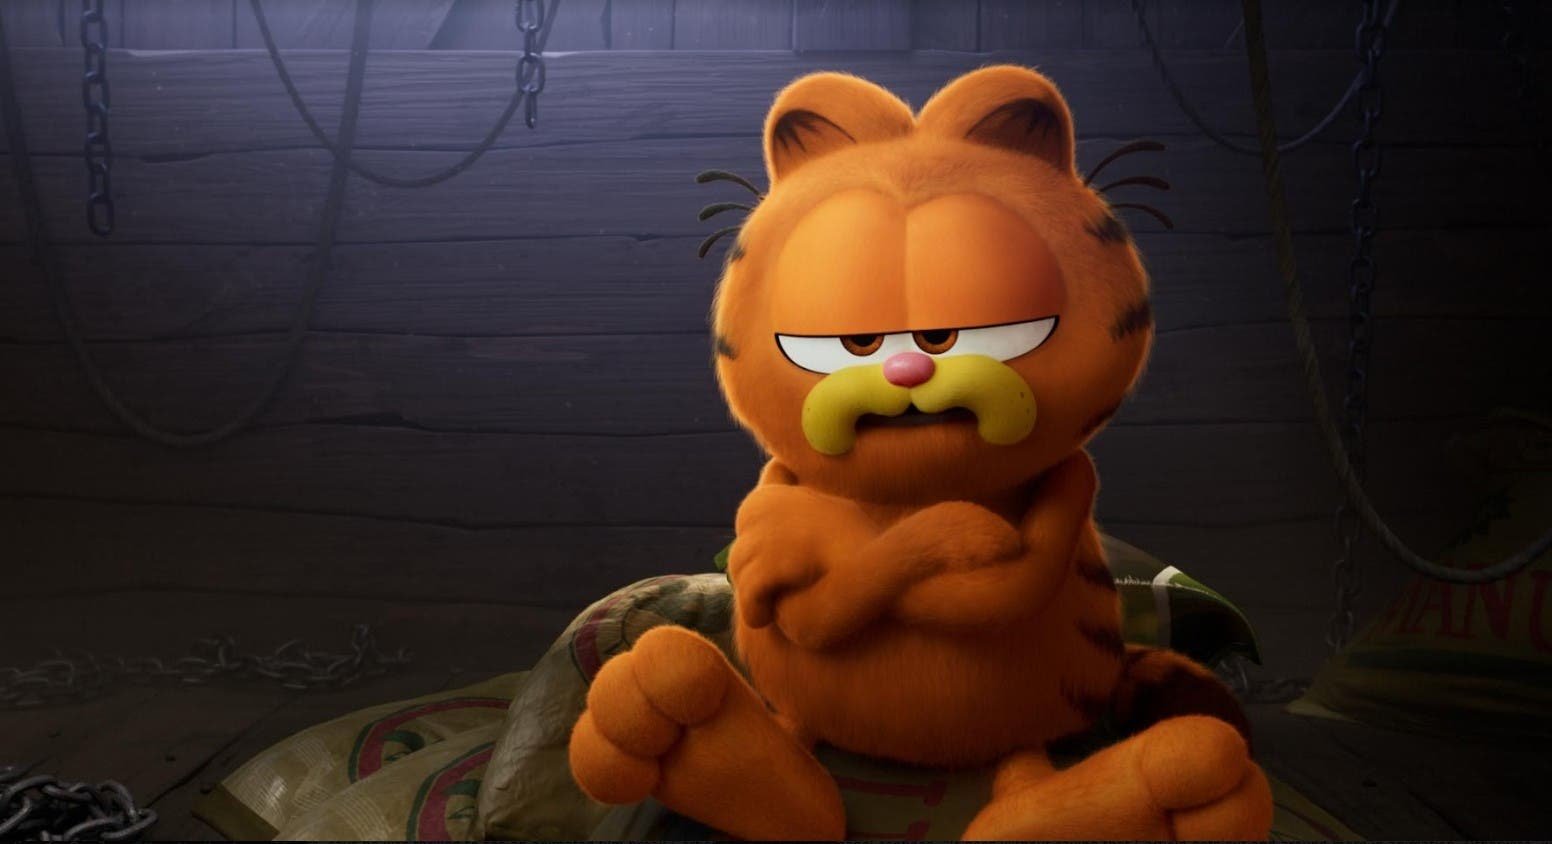 Garfield Creator Jim Davis Talks About Chris Pratt as the Voice Behind his Beloved Character in The Garfield Movie